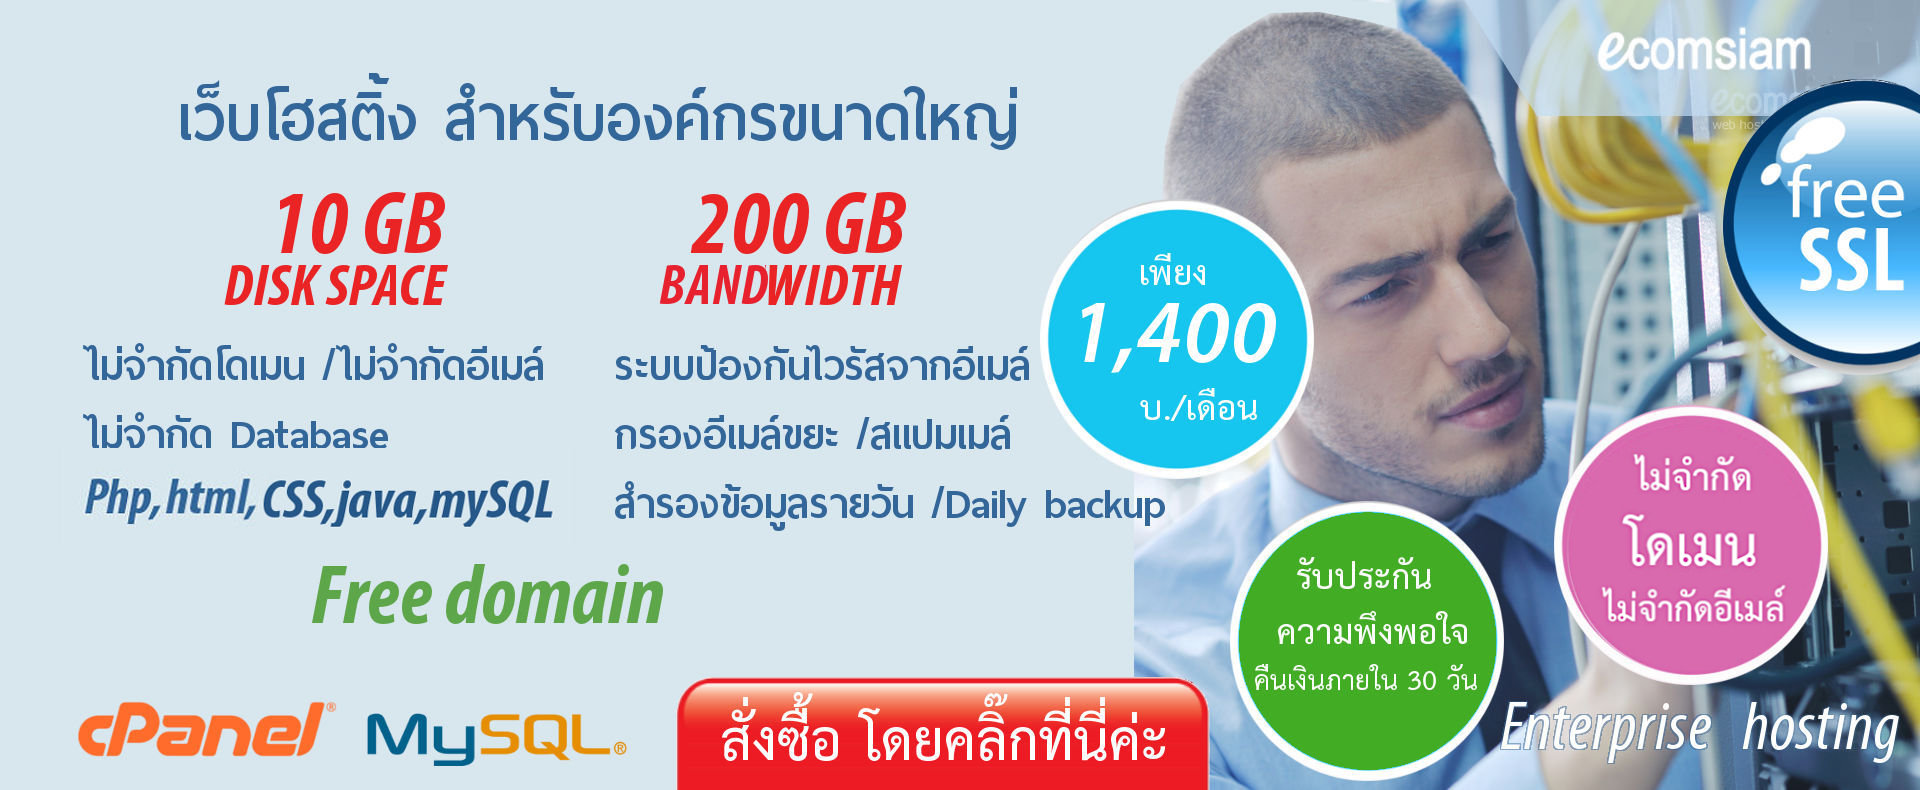 web hosting thai แนะนำ Enterprise web hosting thailand เว็บโฮสต์ติ้งสำหรับองค์กรขนาดใหญ่ ไม่จำกัดโดเมน ราคาเพียง 1,400 บ./เดือน เว็บโฮสติ้งไทย ฟรี โดเมน ฟรี SSL ฟรีติดตั้ง แนะนำเว็บโฮสติ้ง บริการลูกค้า  Support ดูแลดี โดย ecomsiam.com - enterprise web hosting thailand free domain